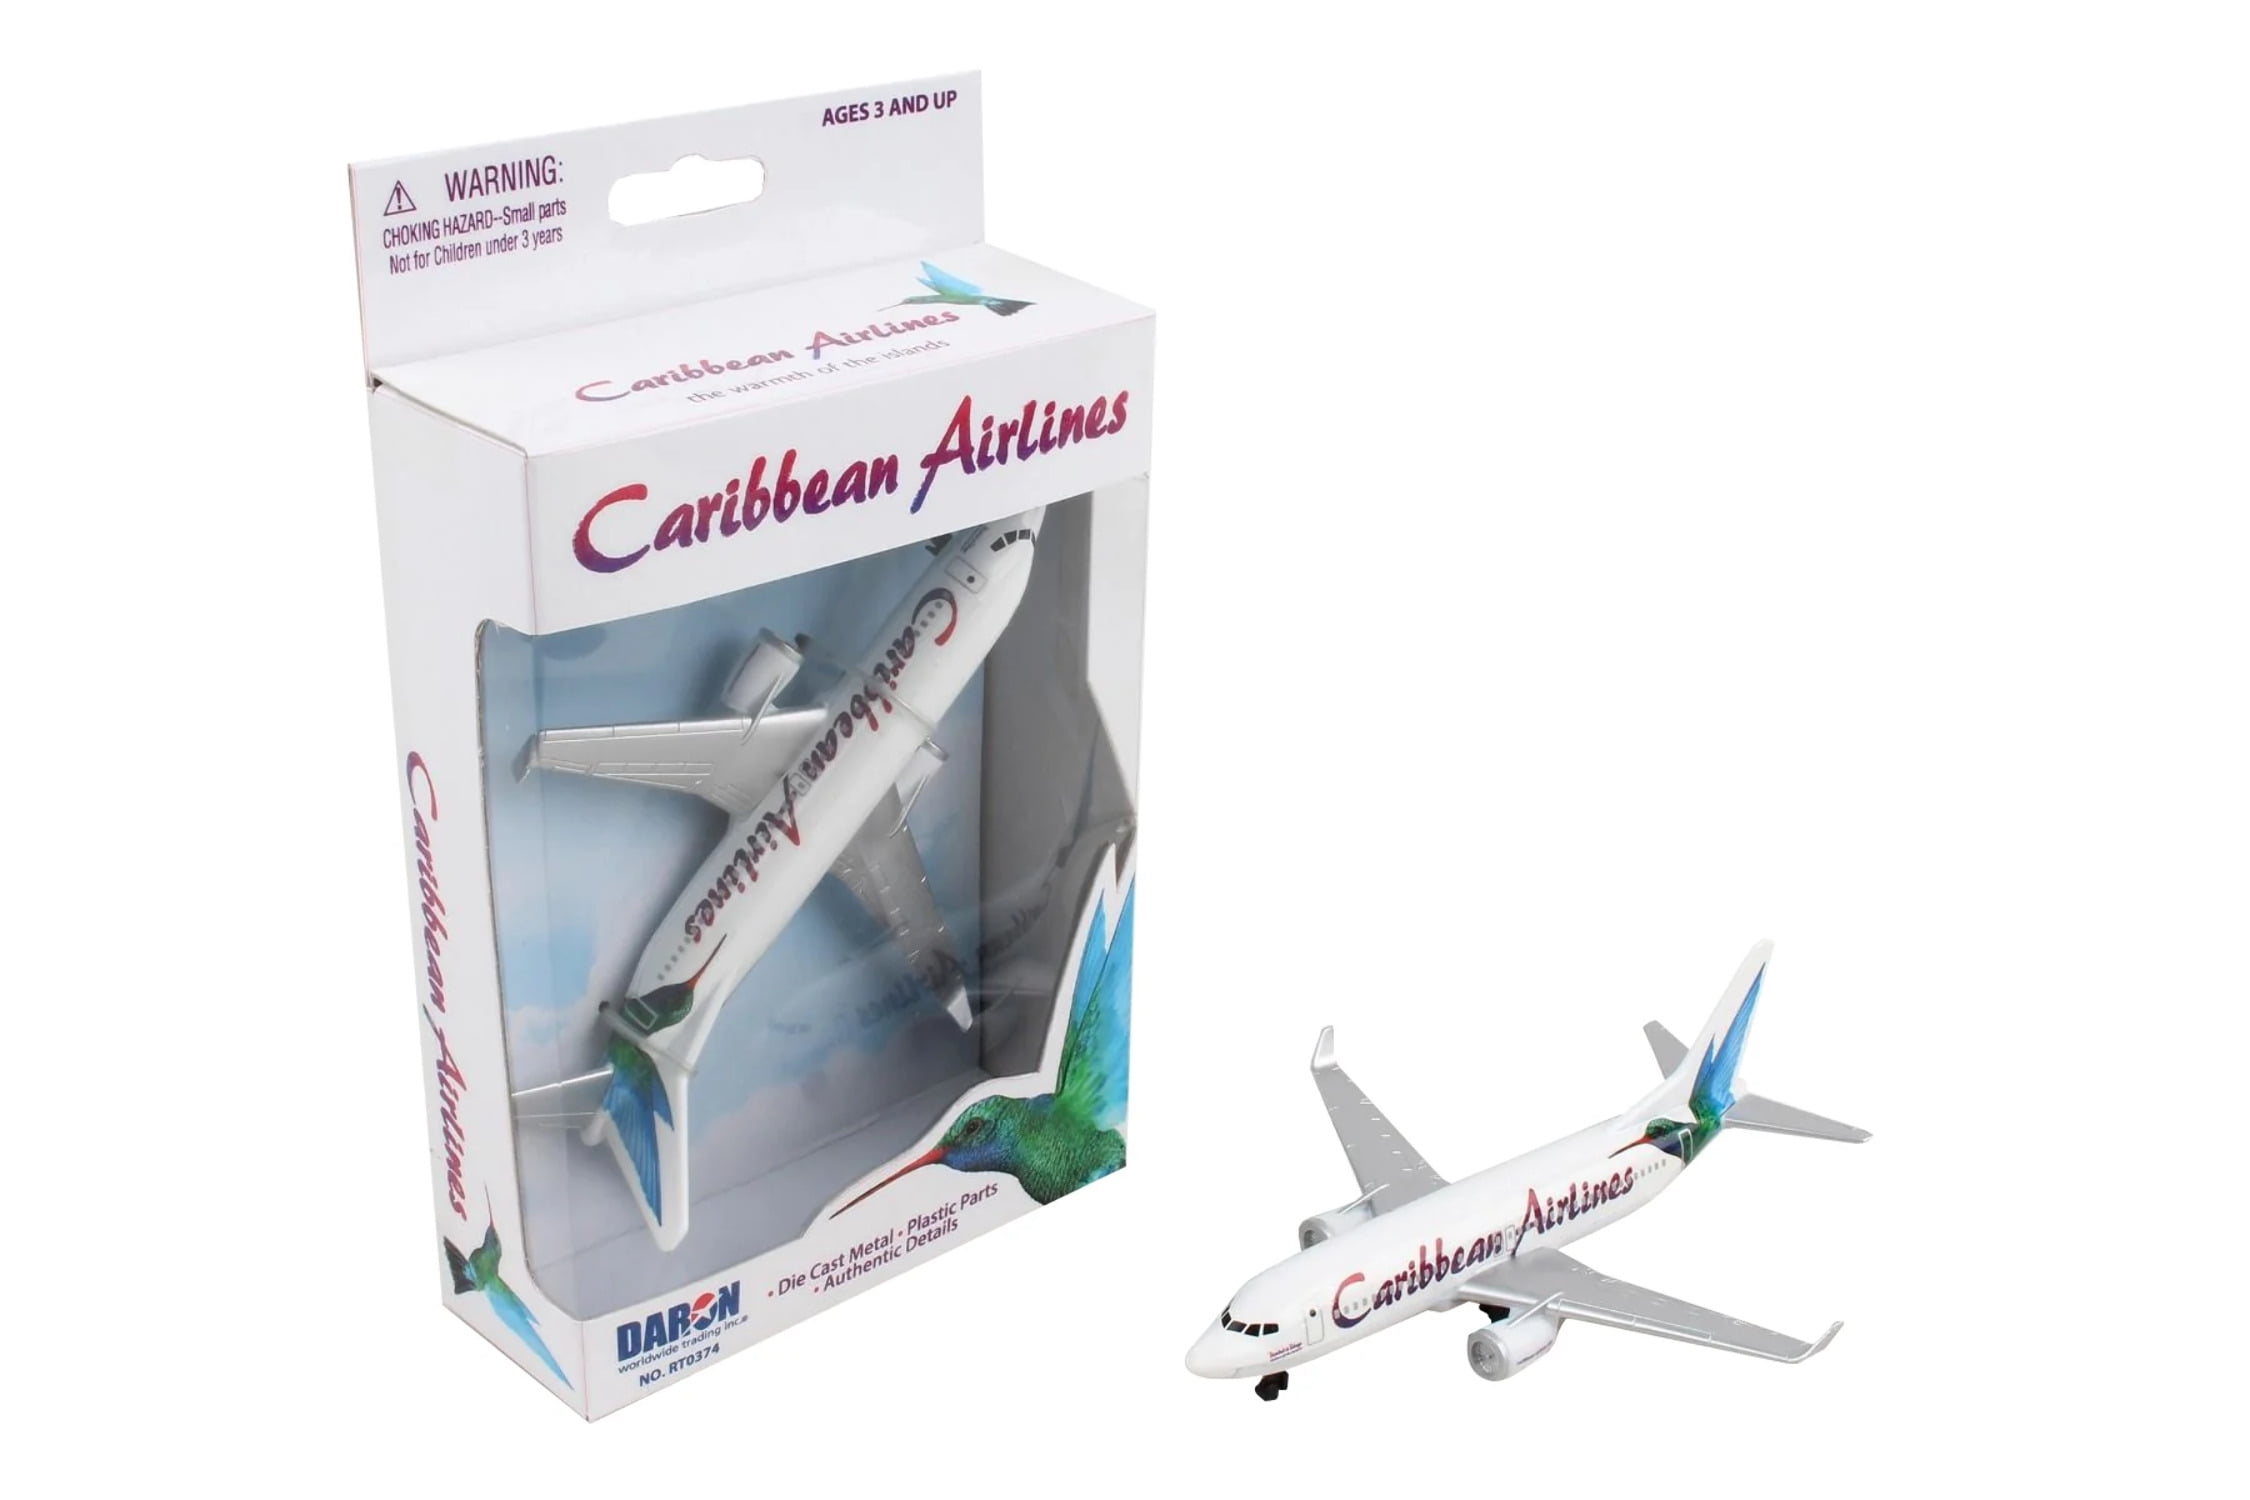 Rt0374 Caribbean Airlines Airliner Single Model Plane